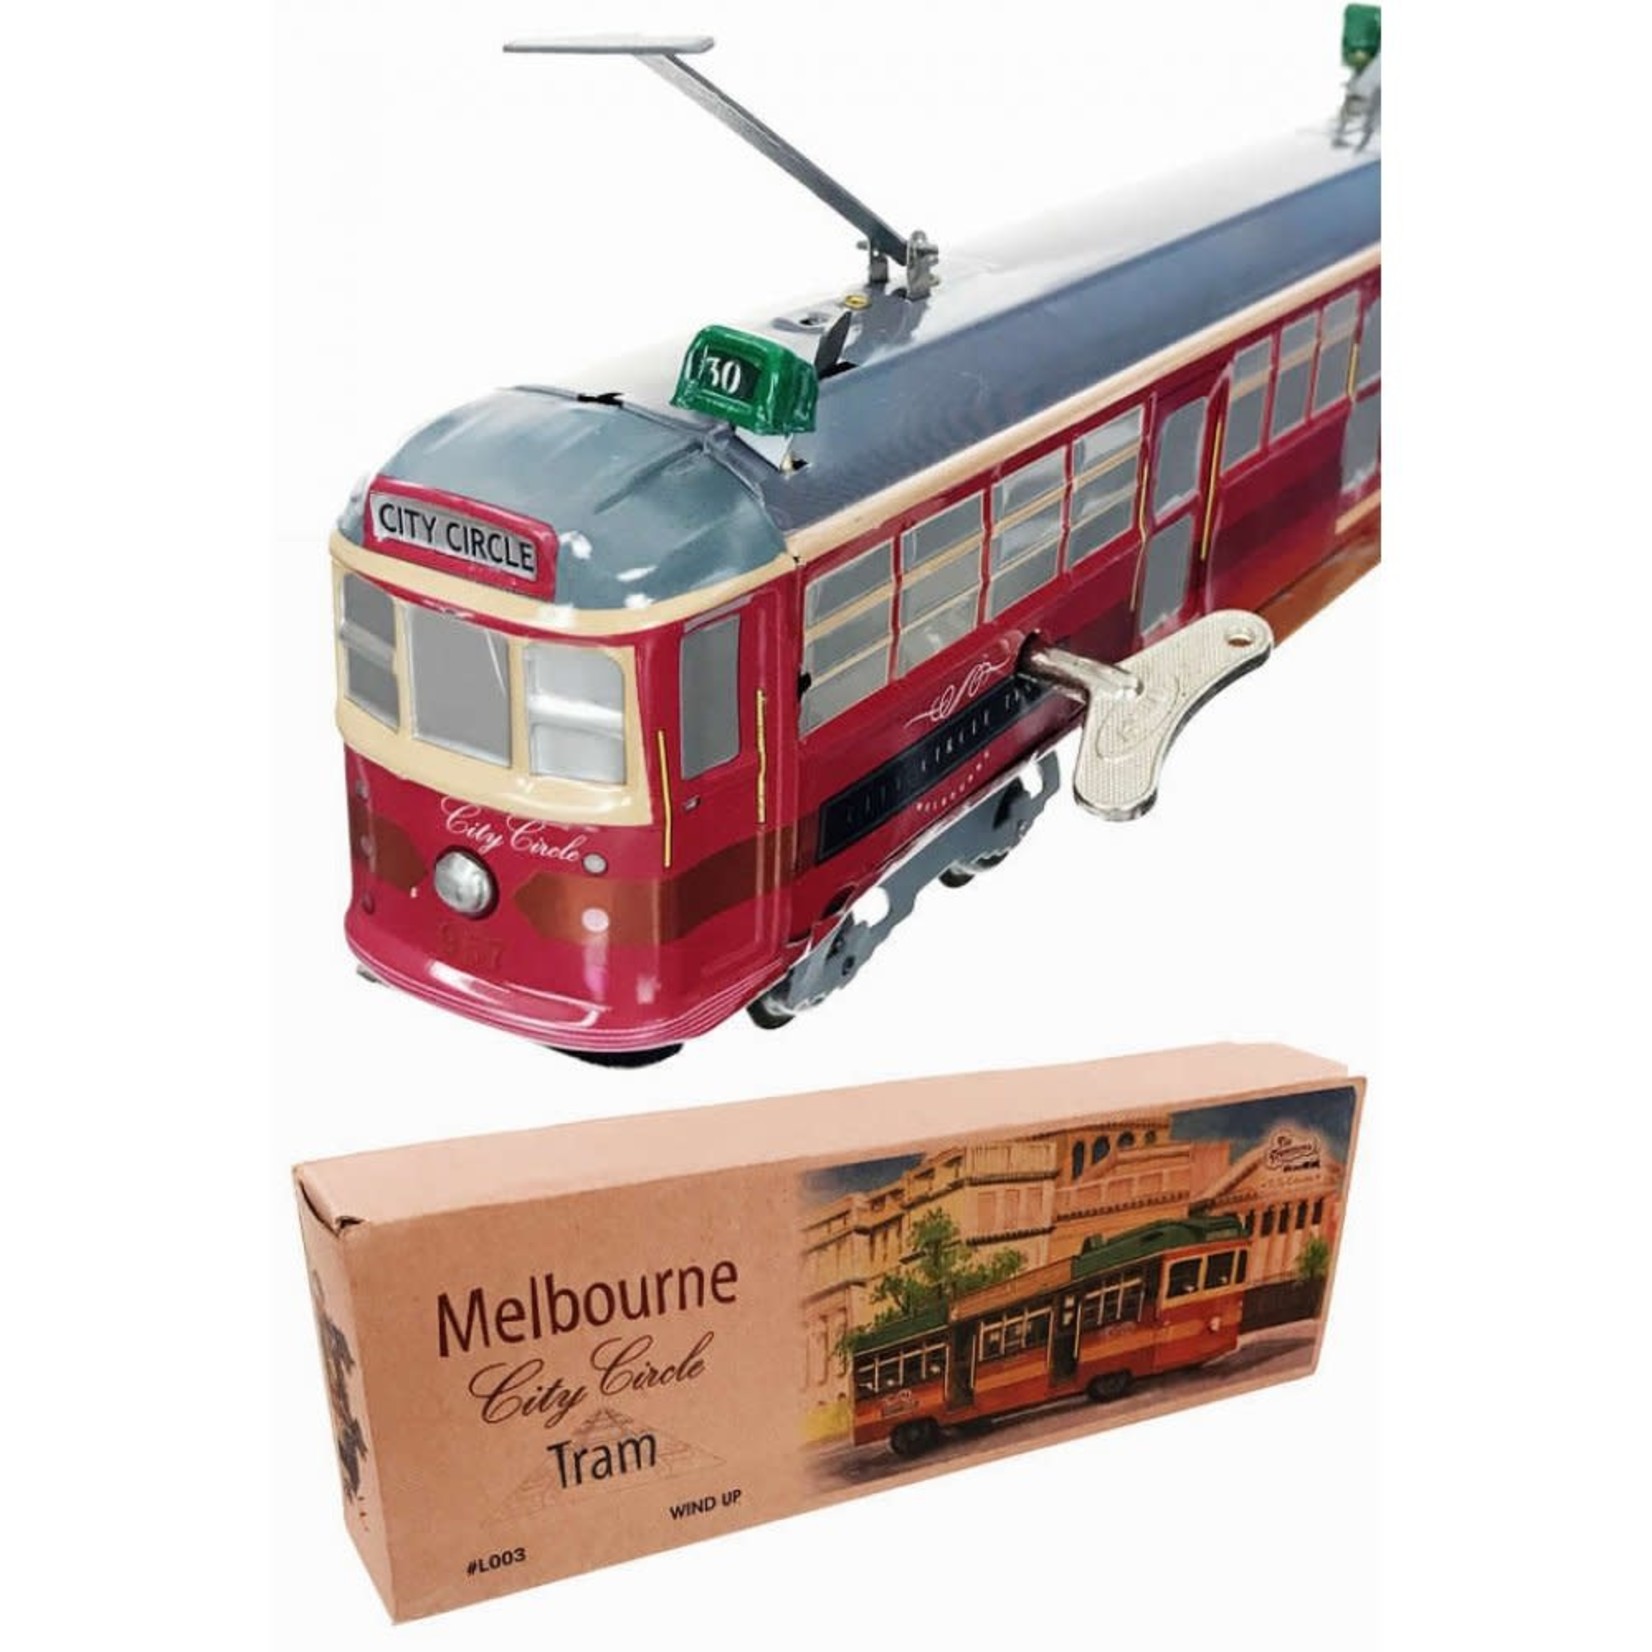 Tin Toy Arcade City Circle Tram Melbourne Street Car